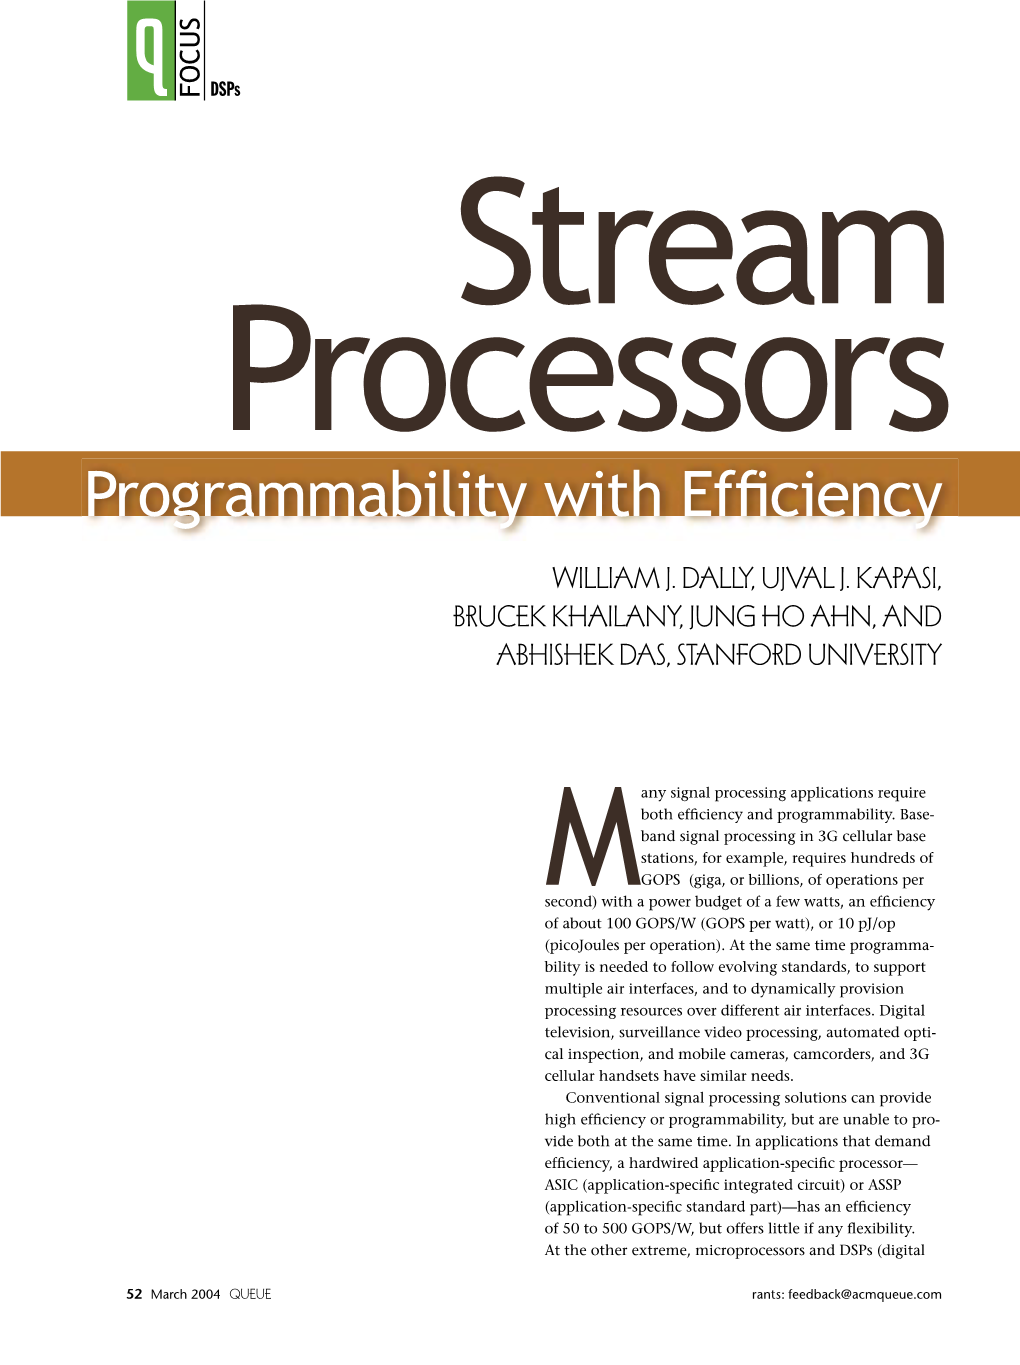 Stream Processors: Programmability with Efficiency